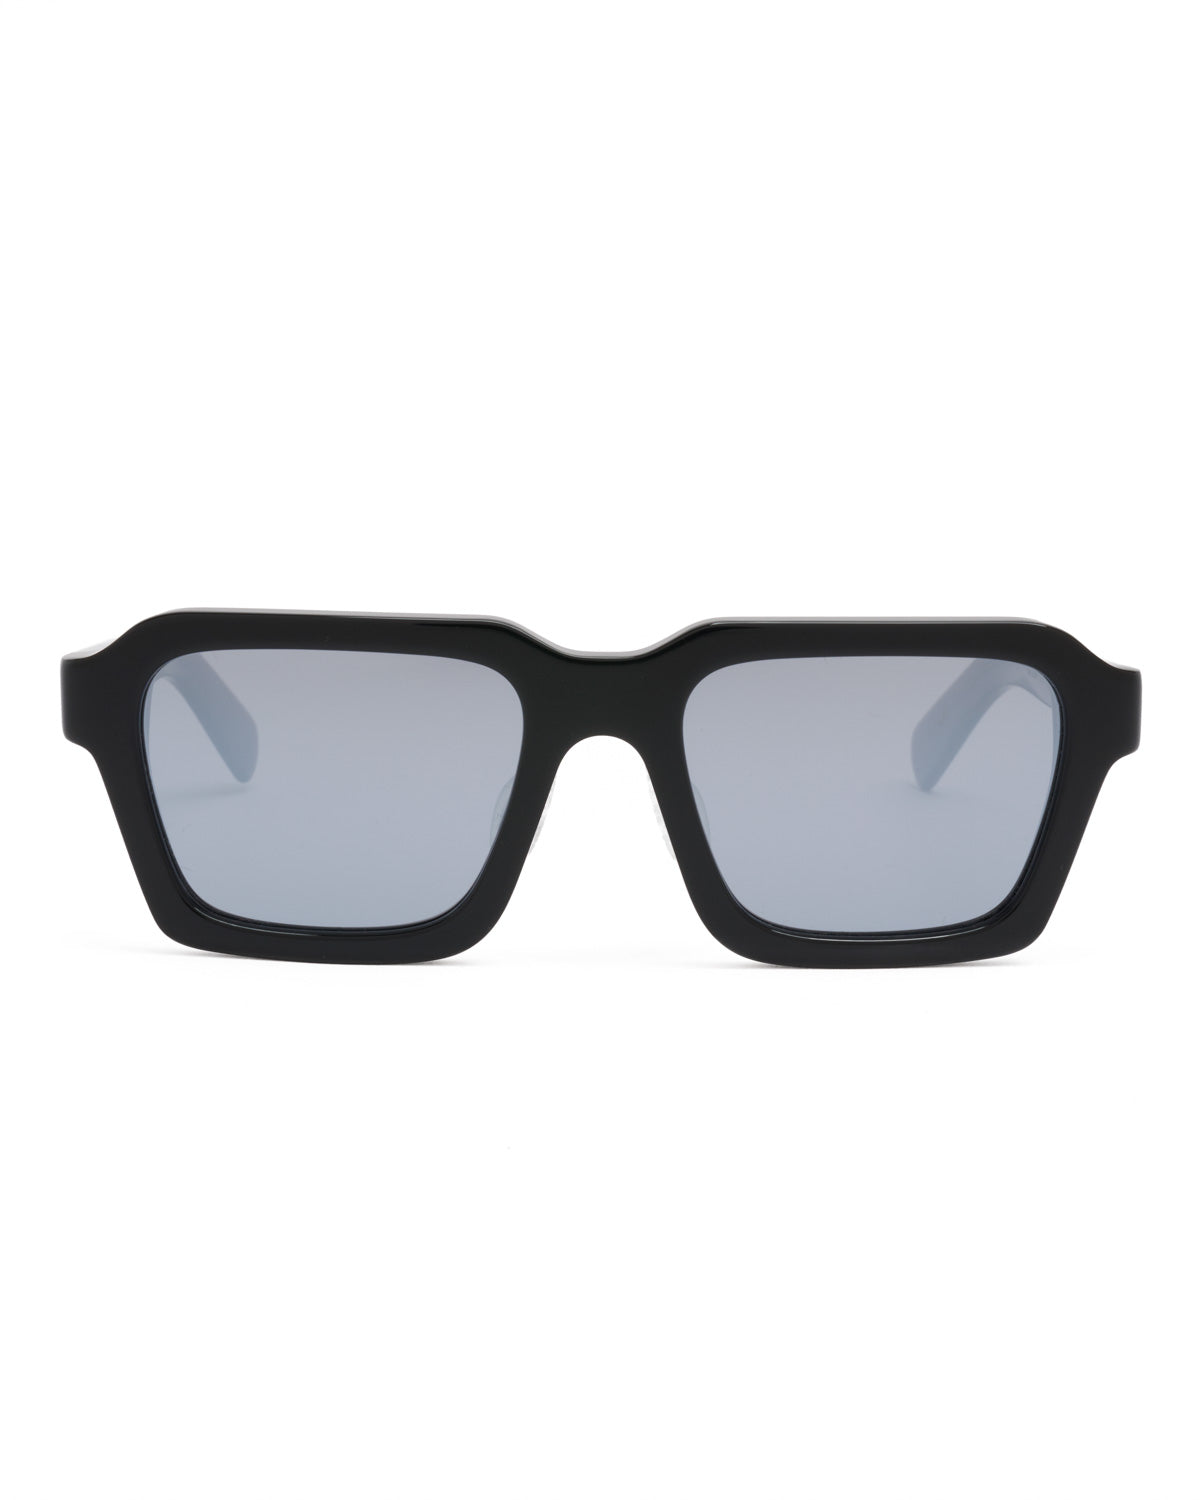 Staunton Post Modern Primitive Eye Protection Sunglasses - Black/Mirror Chrome 1